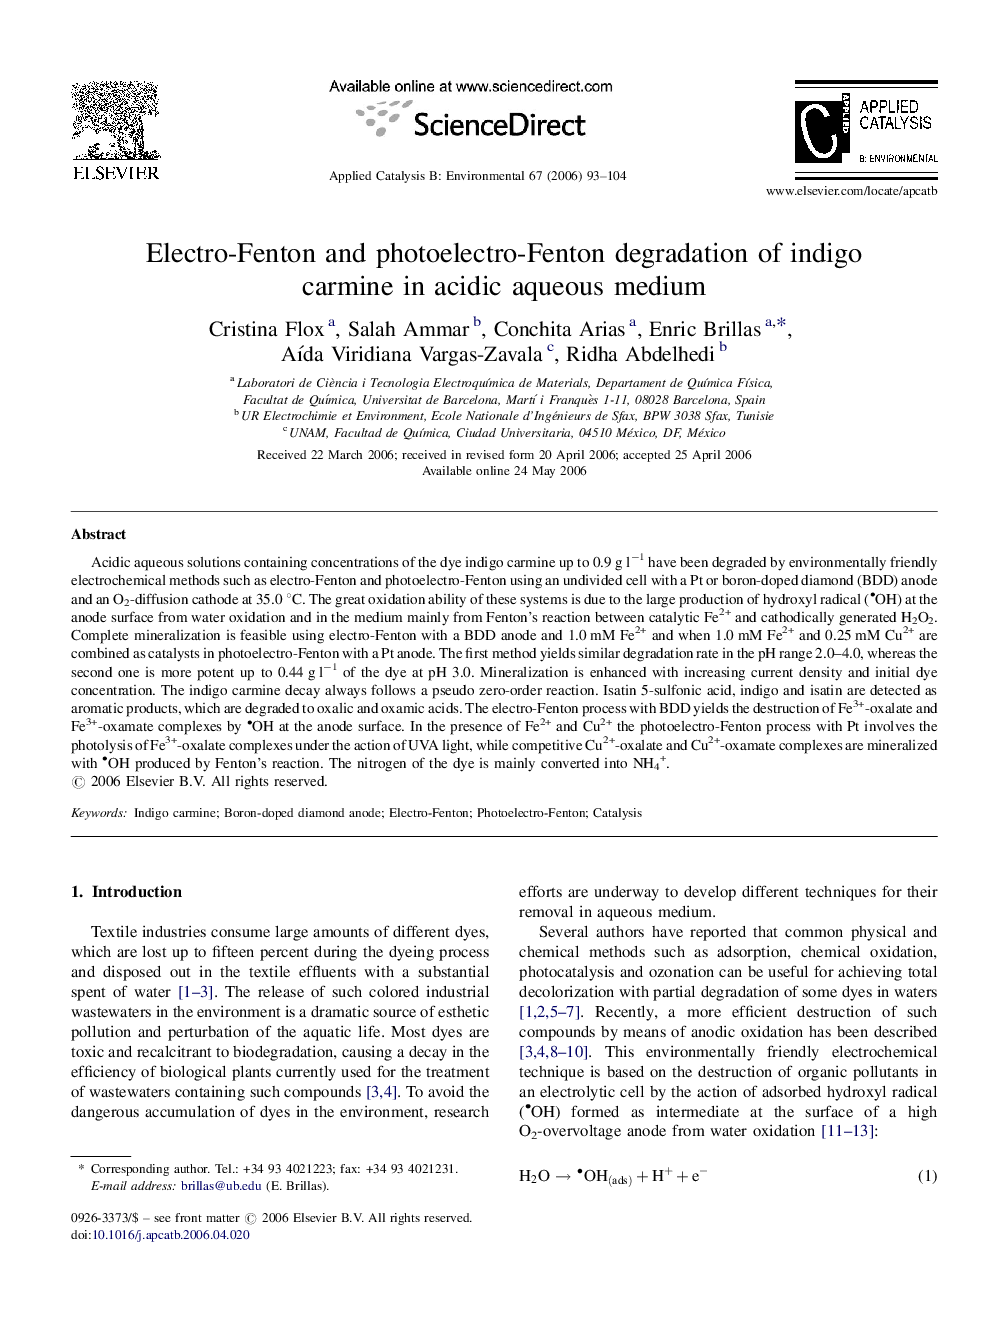 Electro-Fenton and photoelectro-Fenton degradation of indigo carmine in acidic aqueous medium